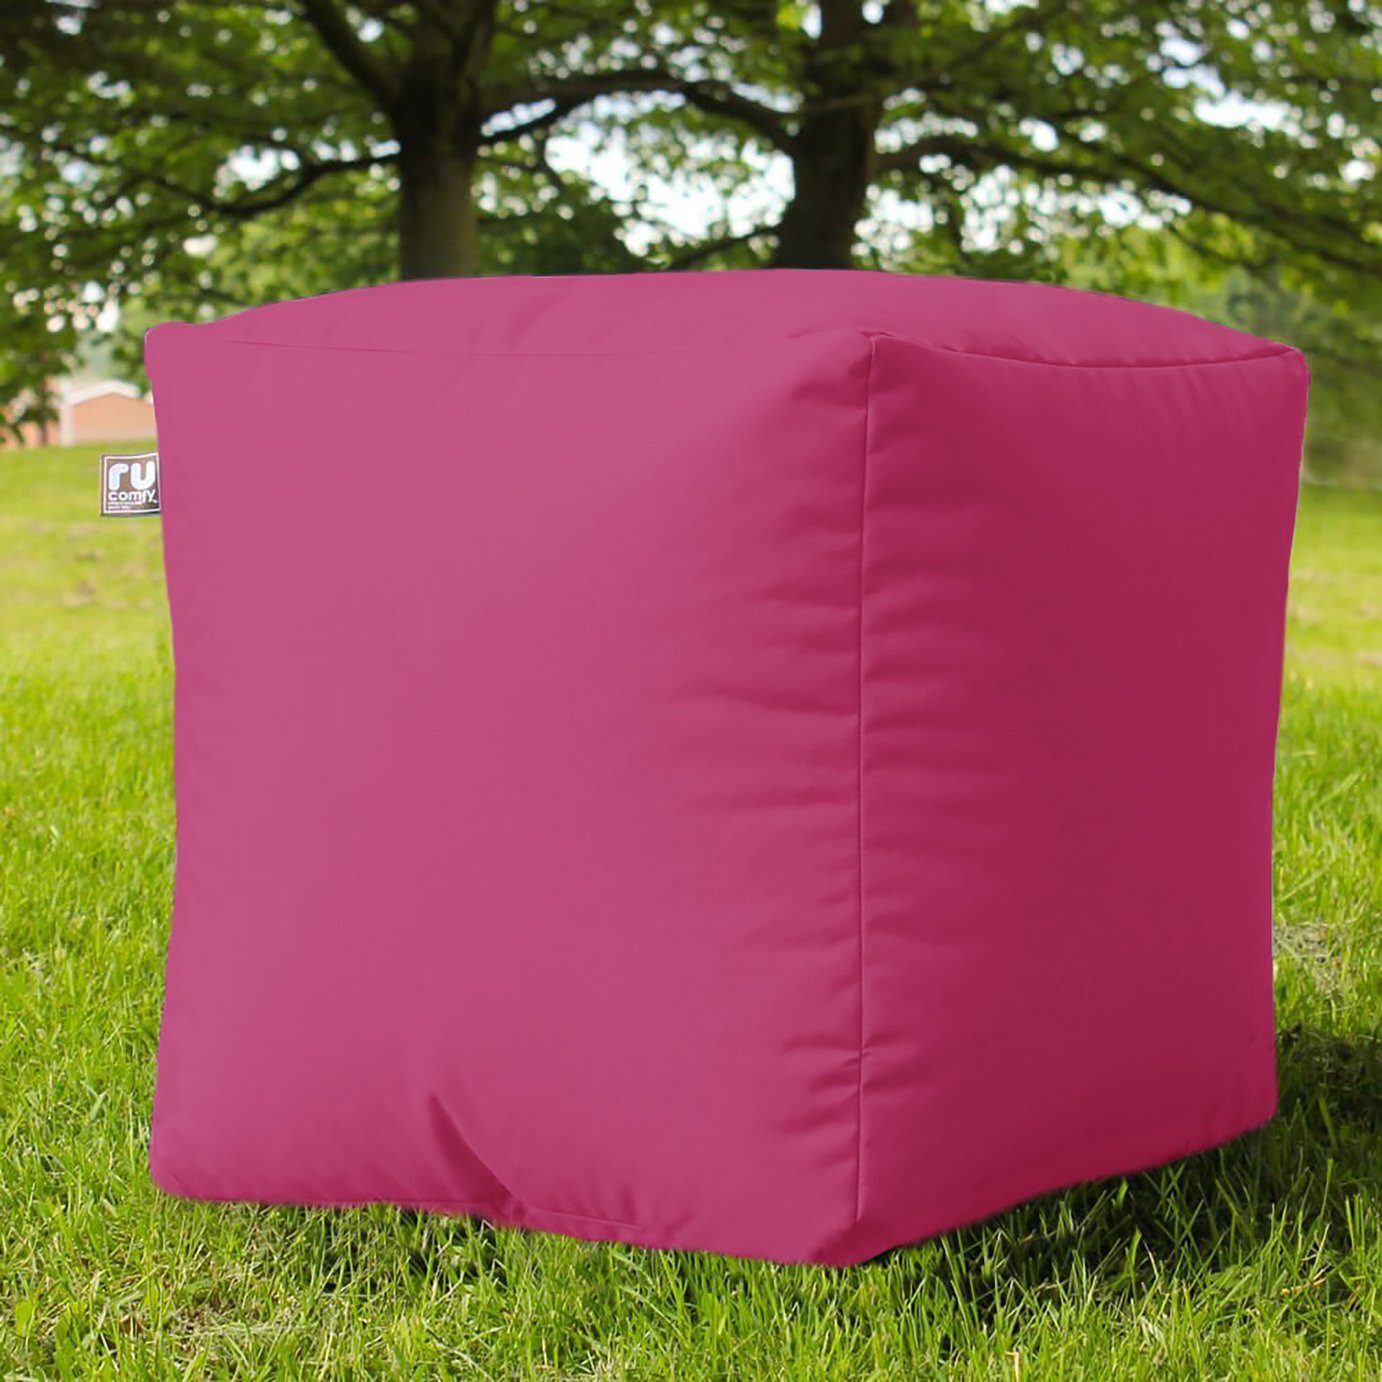 rucomfy Indoor Outdoor Cube Bean Bag - Pink - image 1